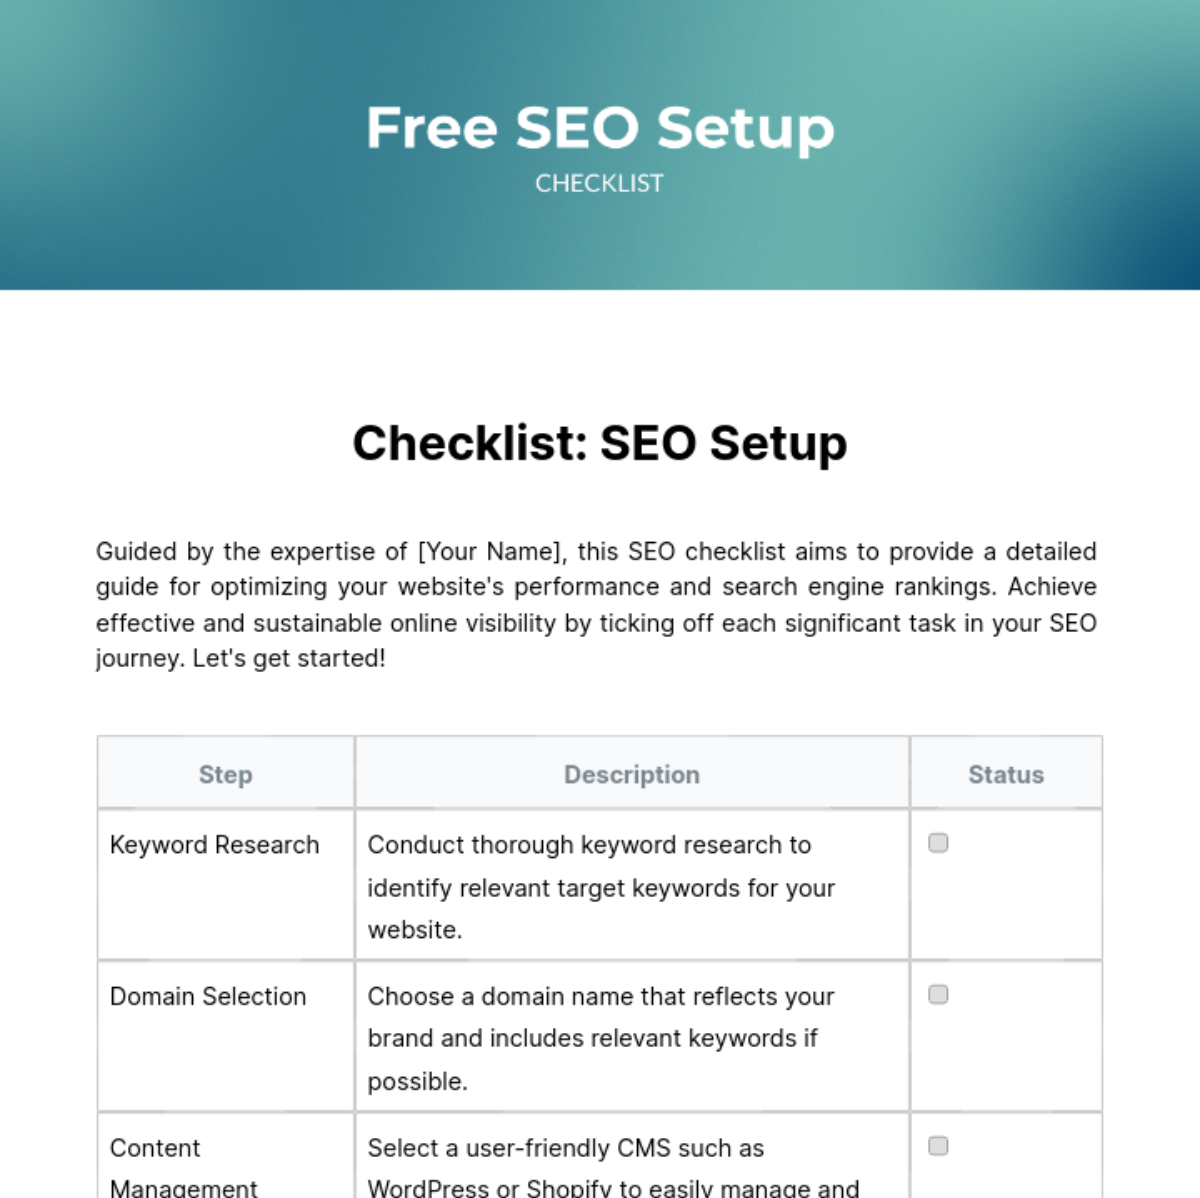 SEO Setup Checklist Template